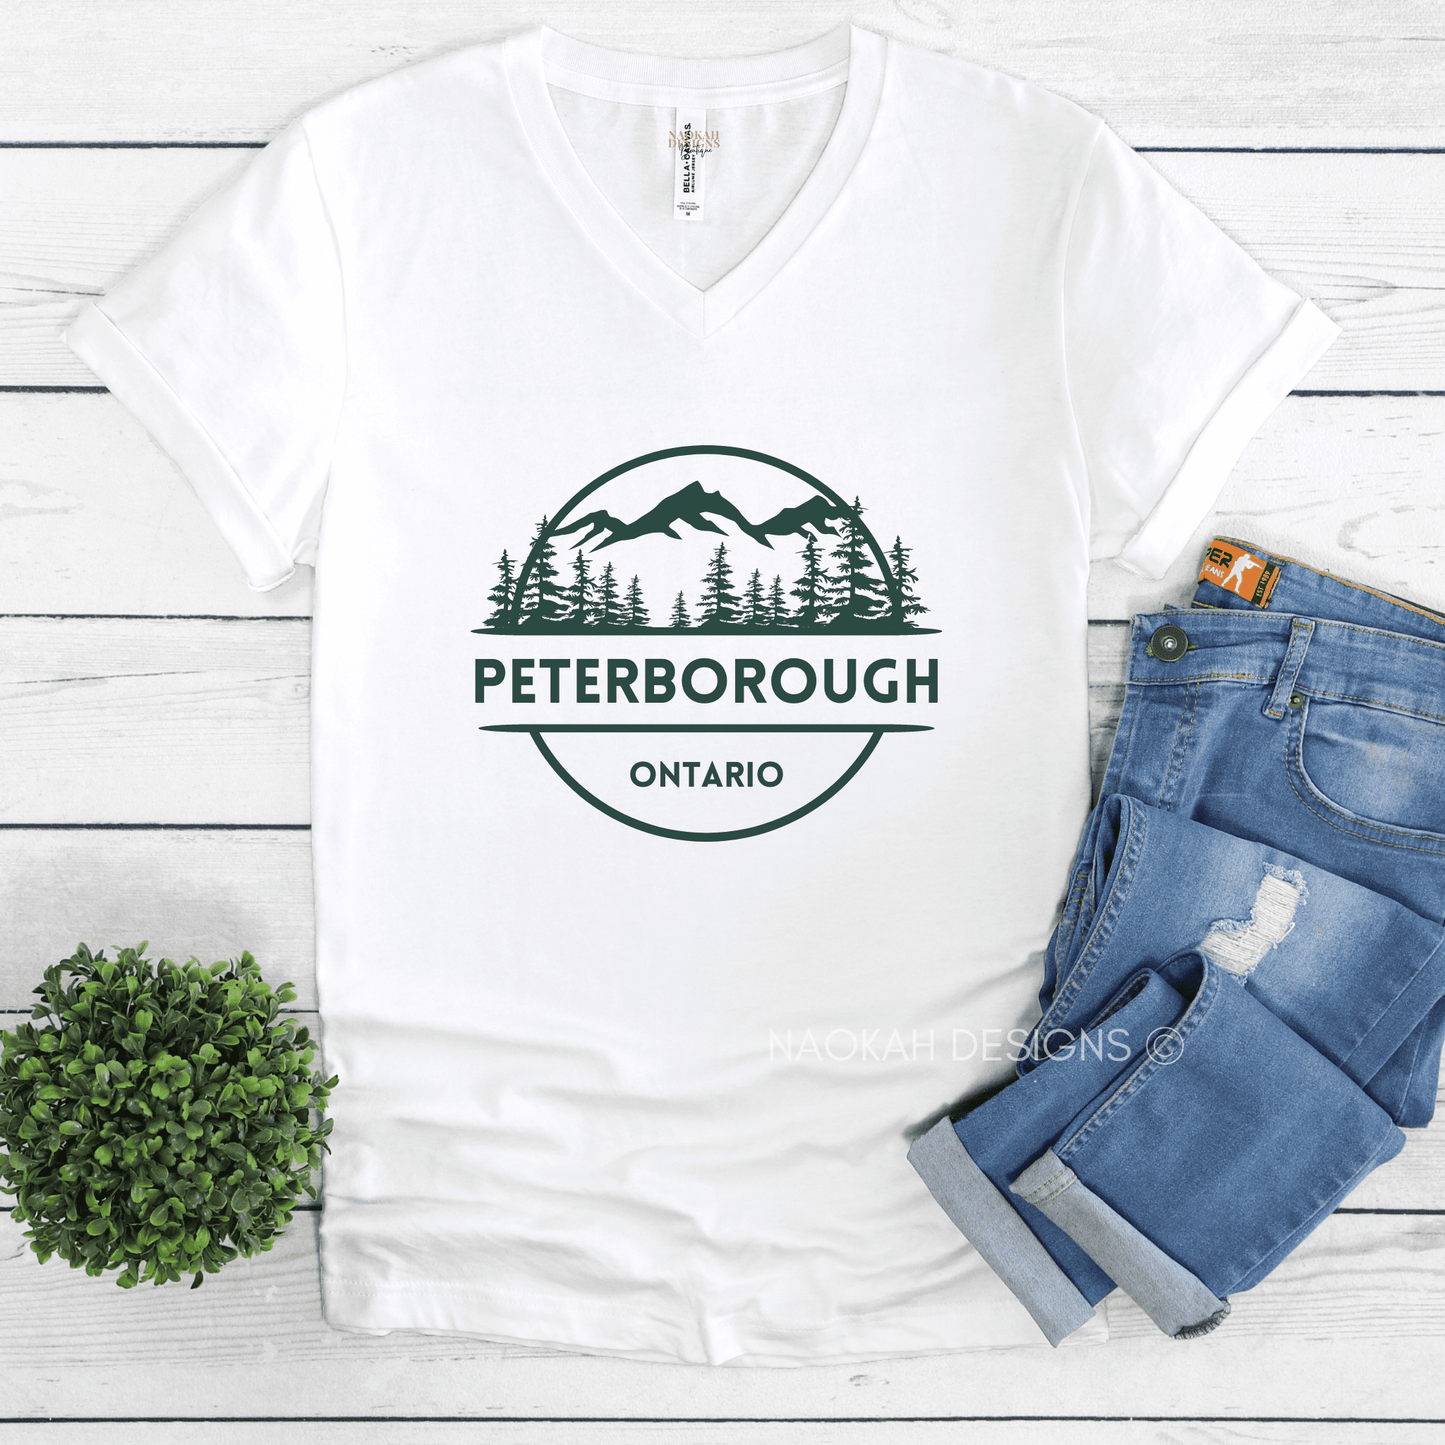 peterborough ontario shirt, kawartha's shirt, ontario shirt, peterborough shirt, kawartha lakes, trent, nature shirt, outdoor shirt, landscape shirt, cottage country shirt